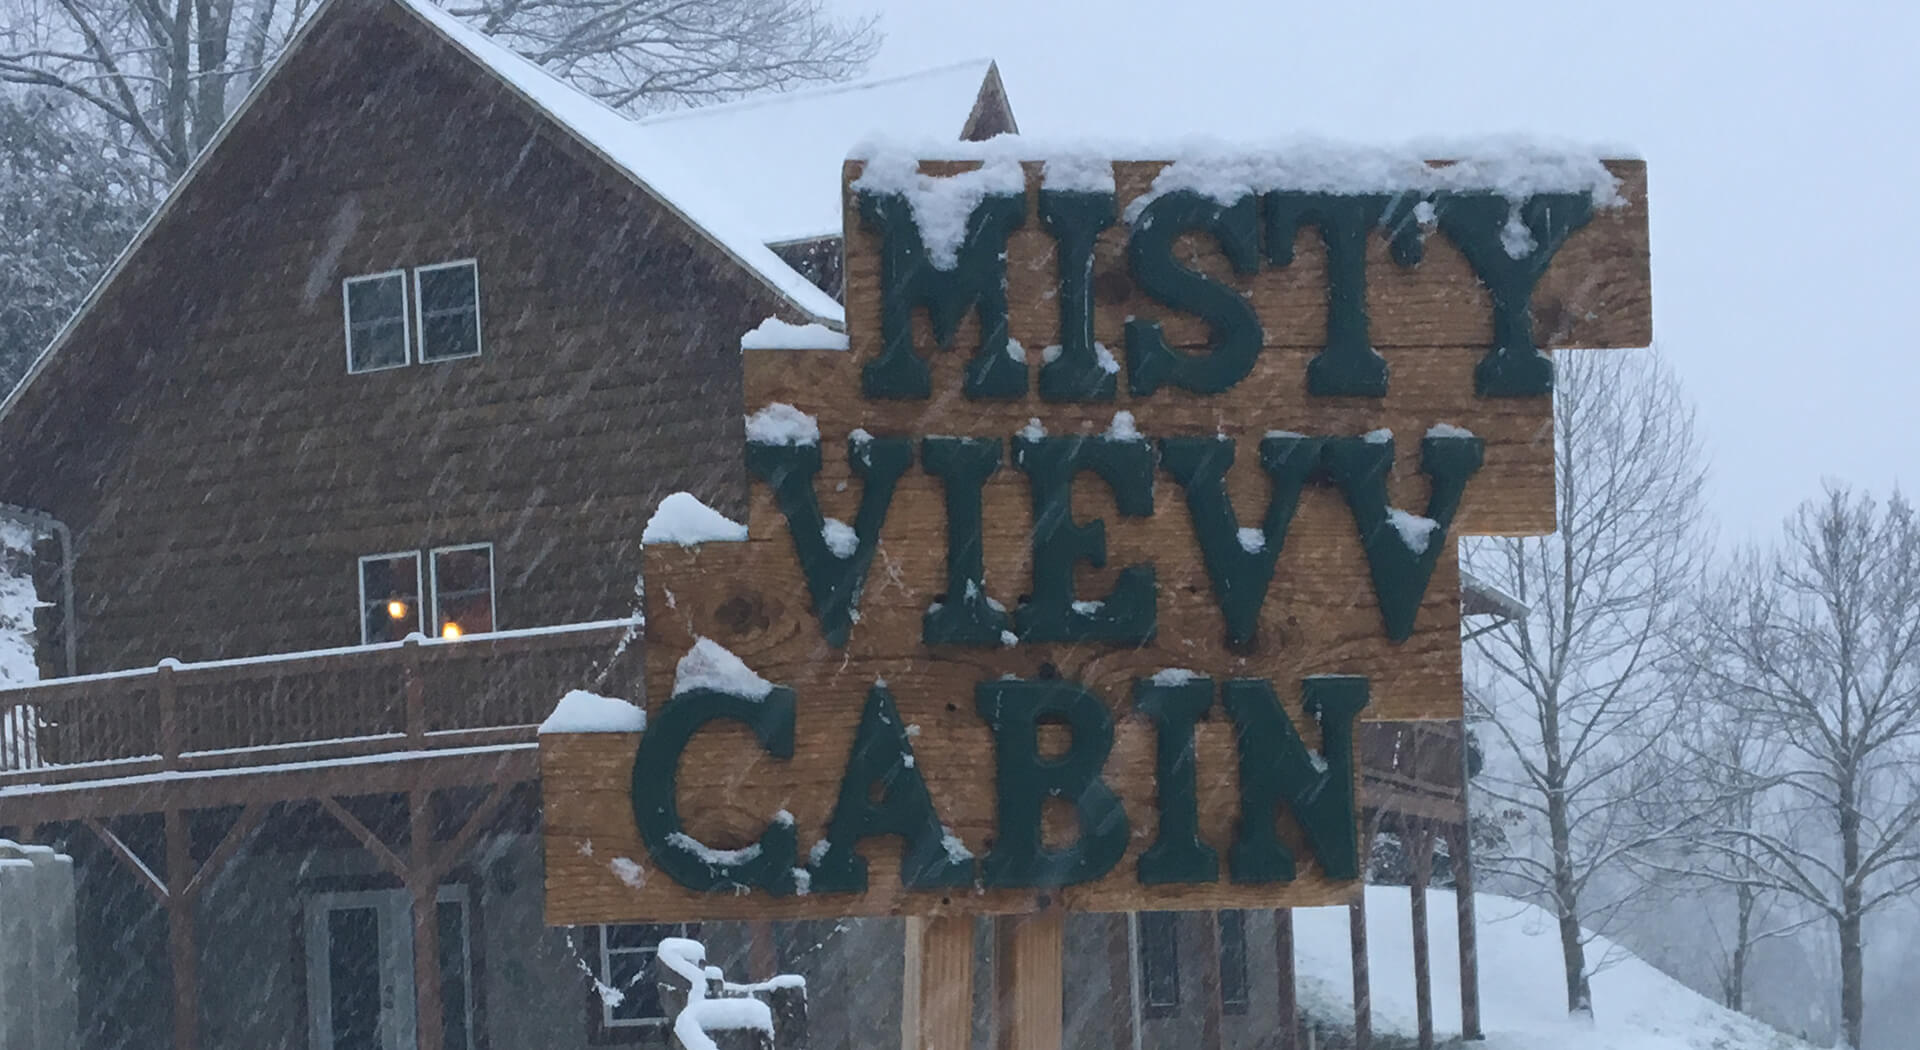 Rent cabin in waynesville on winter